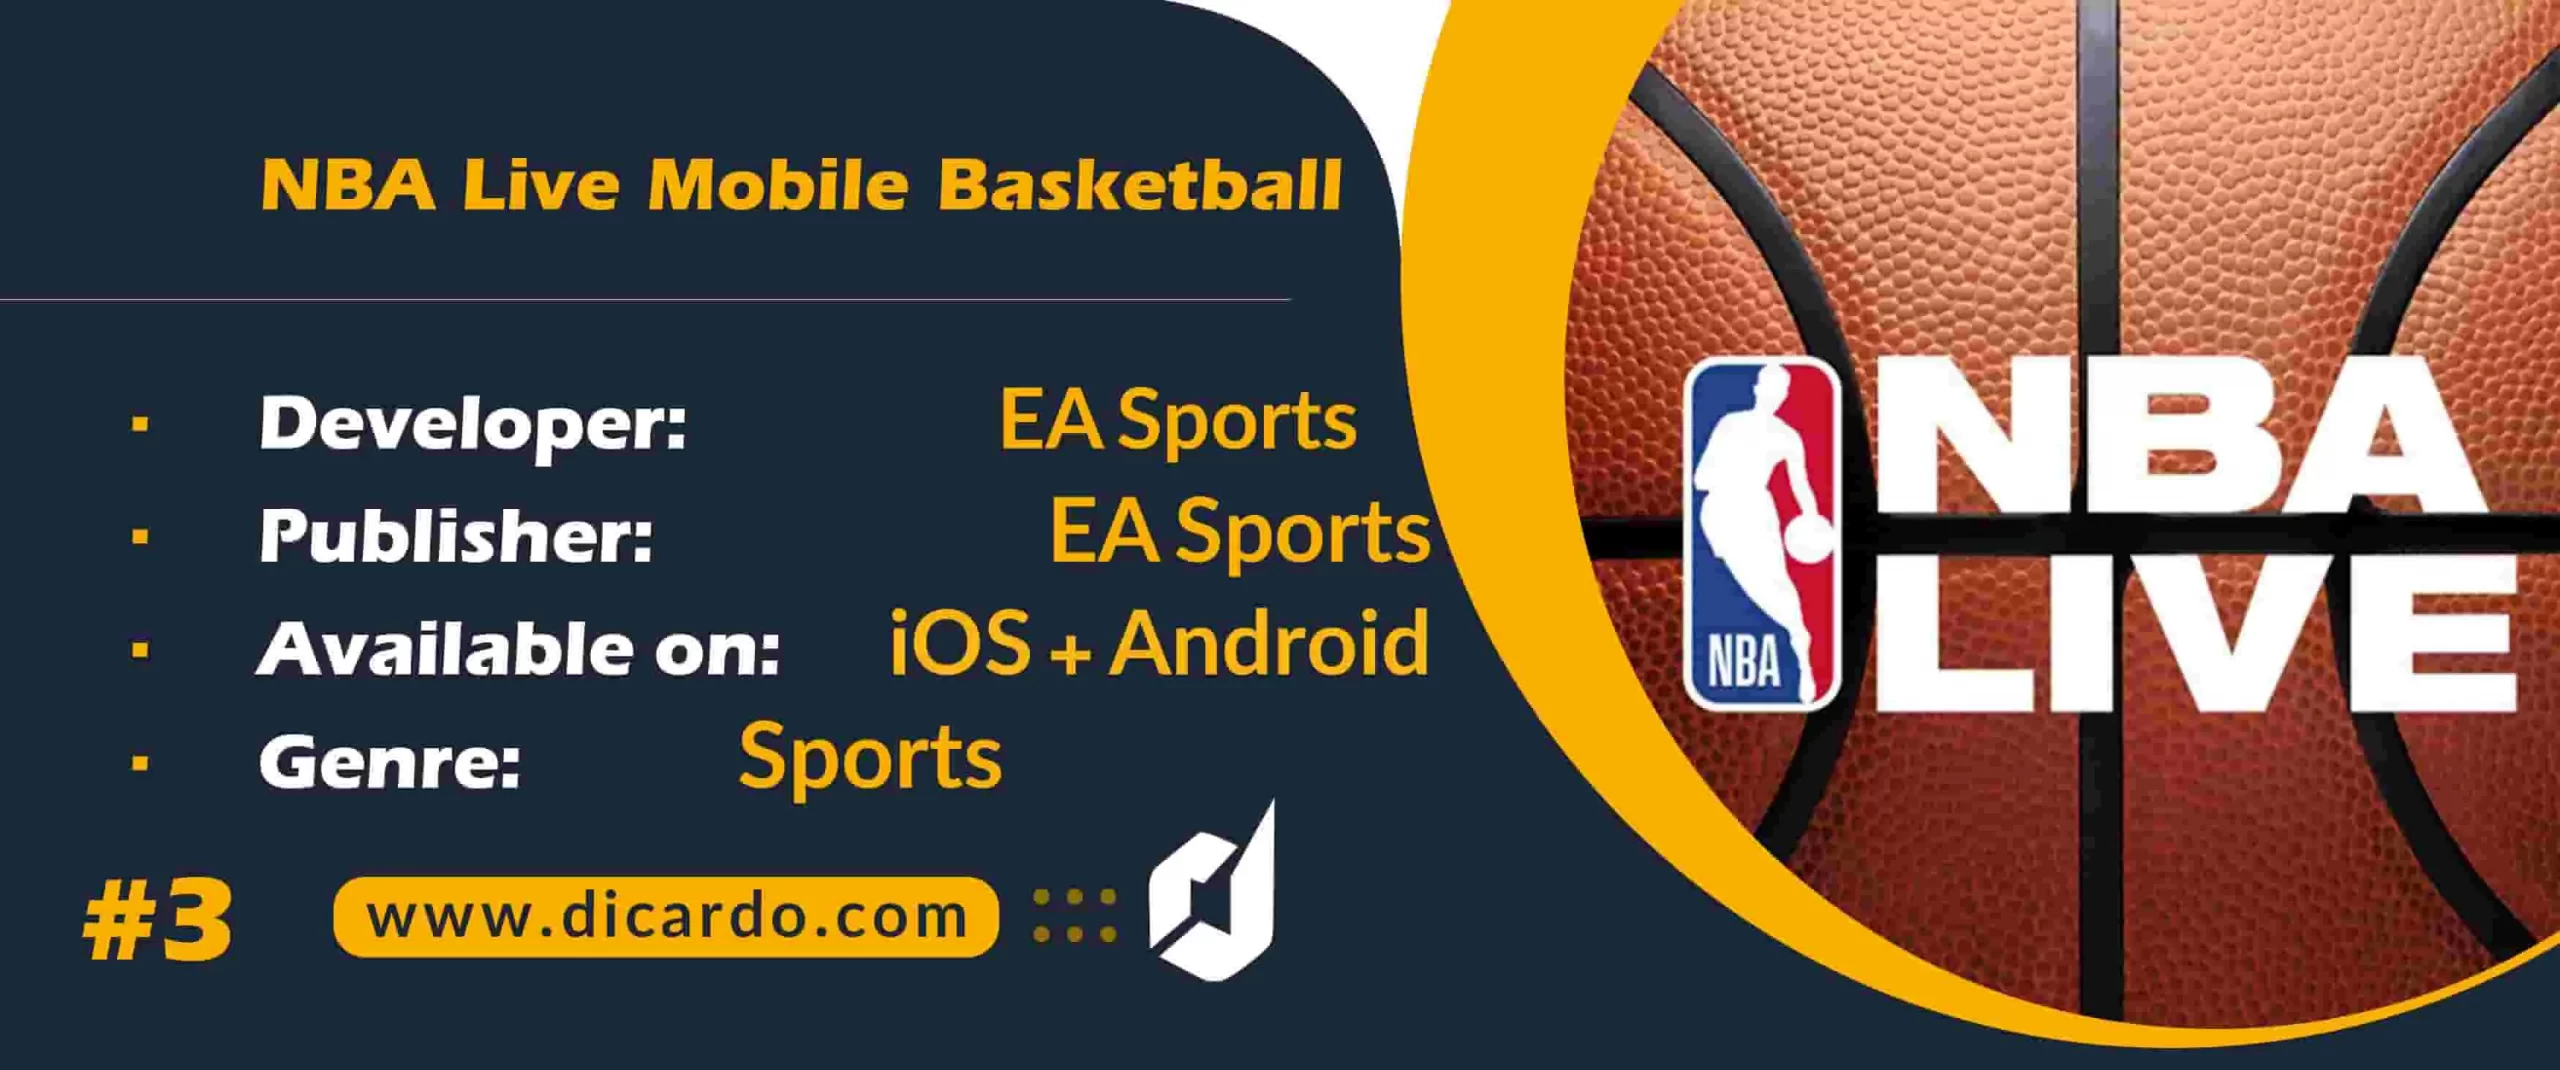 #3 ان بی ای لایو موبایل بسکتبال NBA Live Mobile Basketball